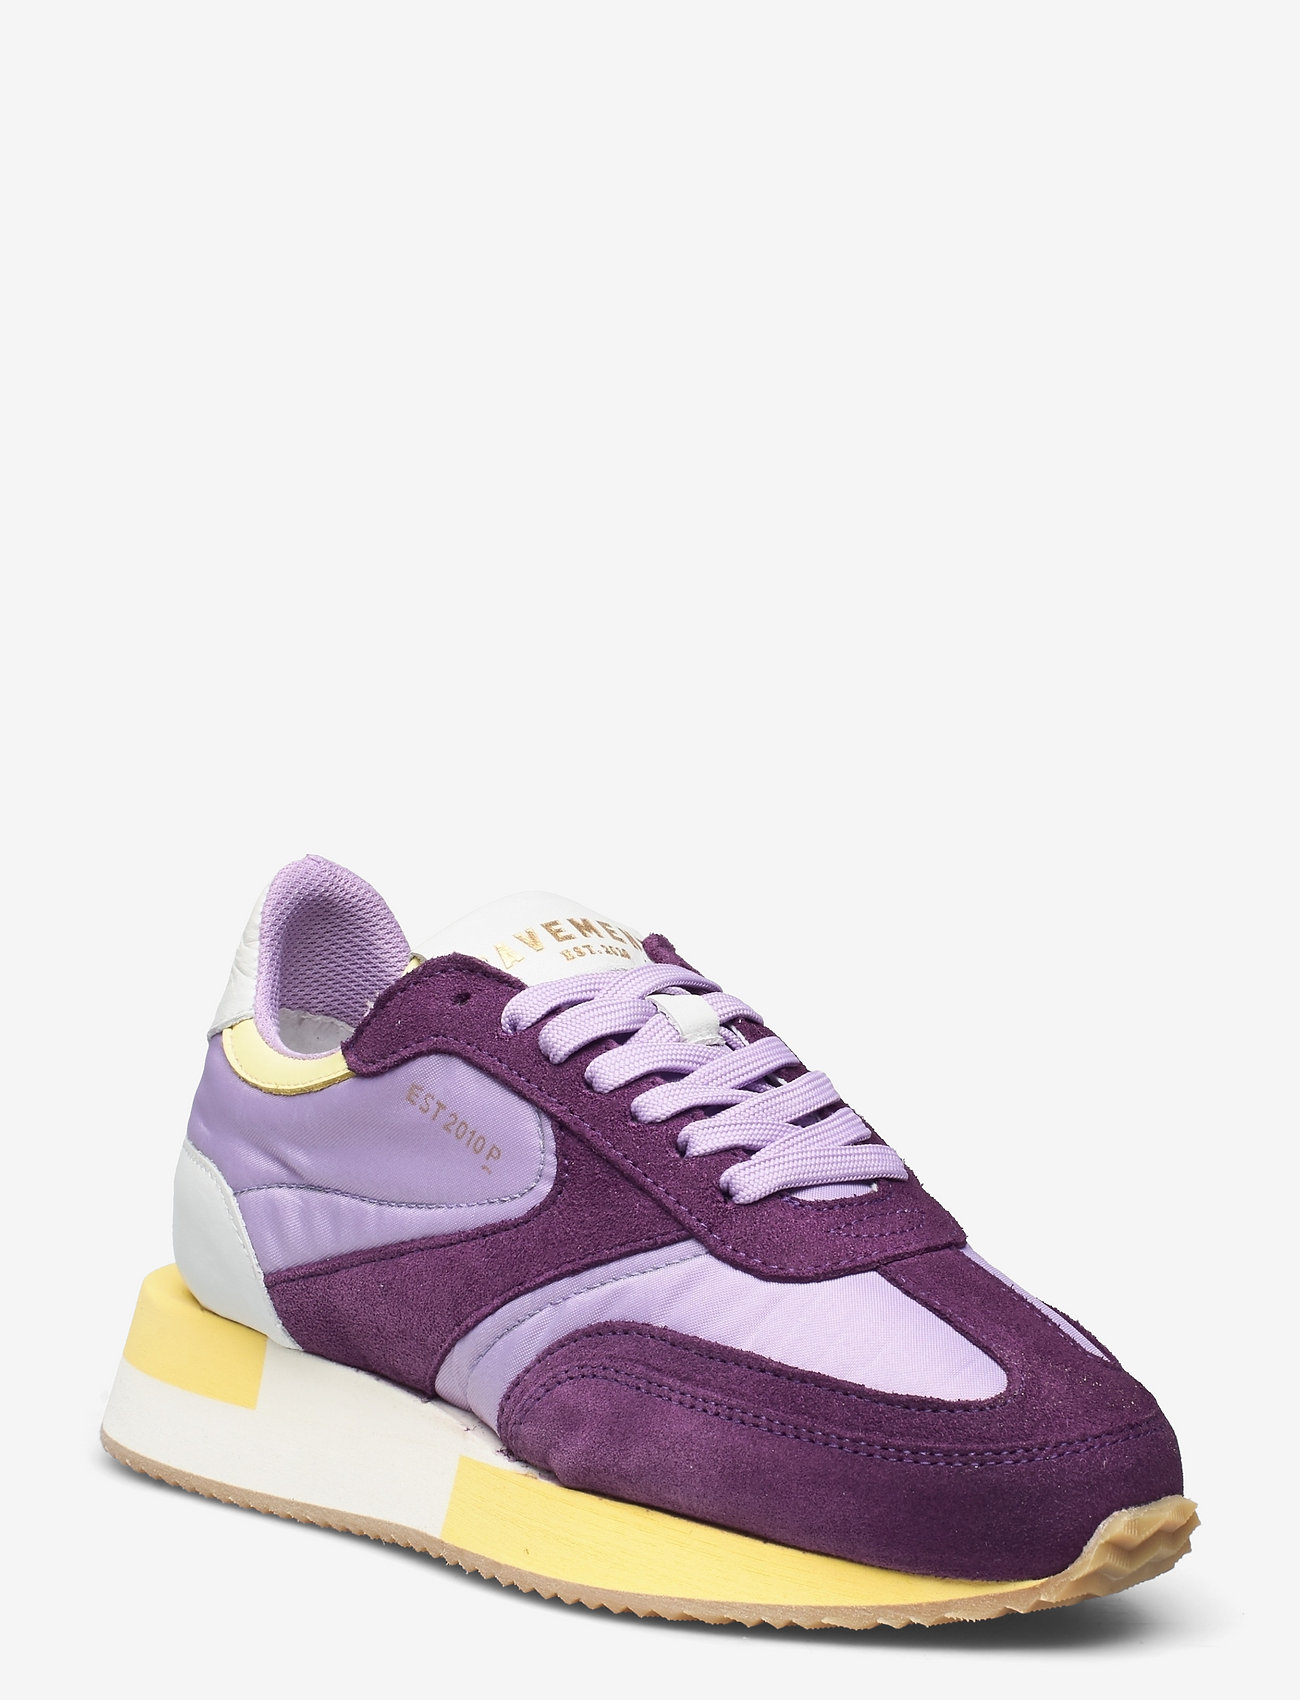 Pavement - Ellie nylon - low top sneakers - purple combo - 0